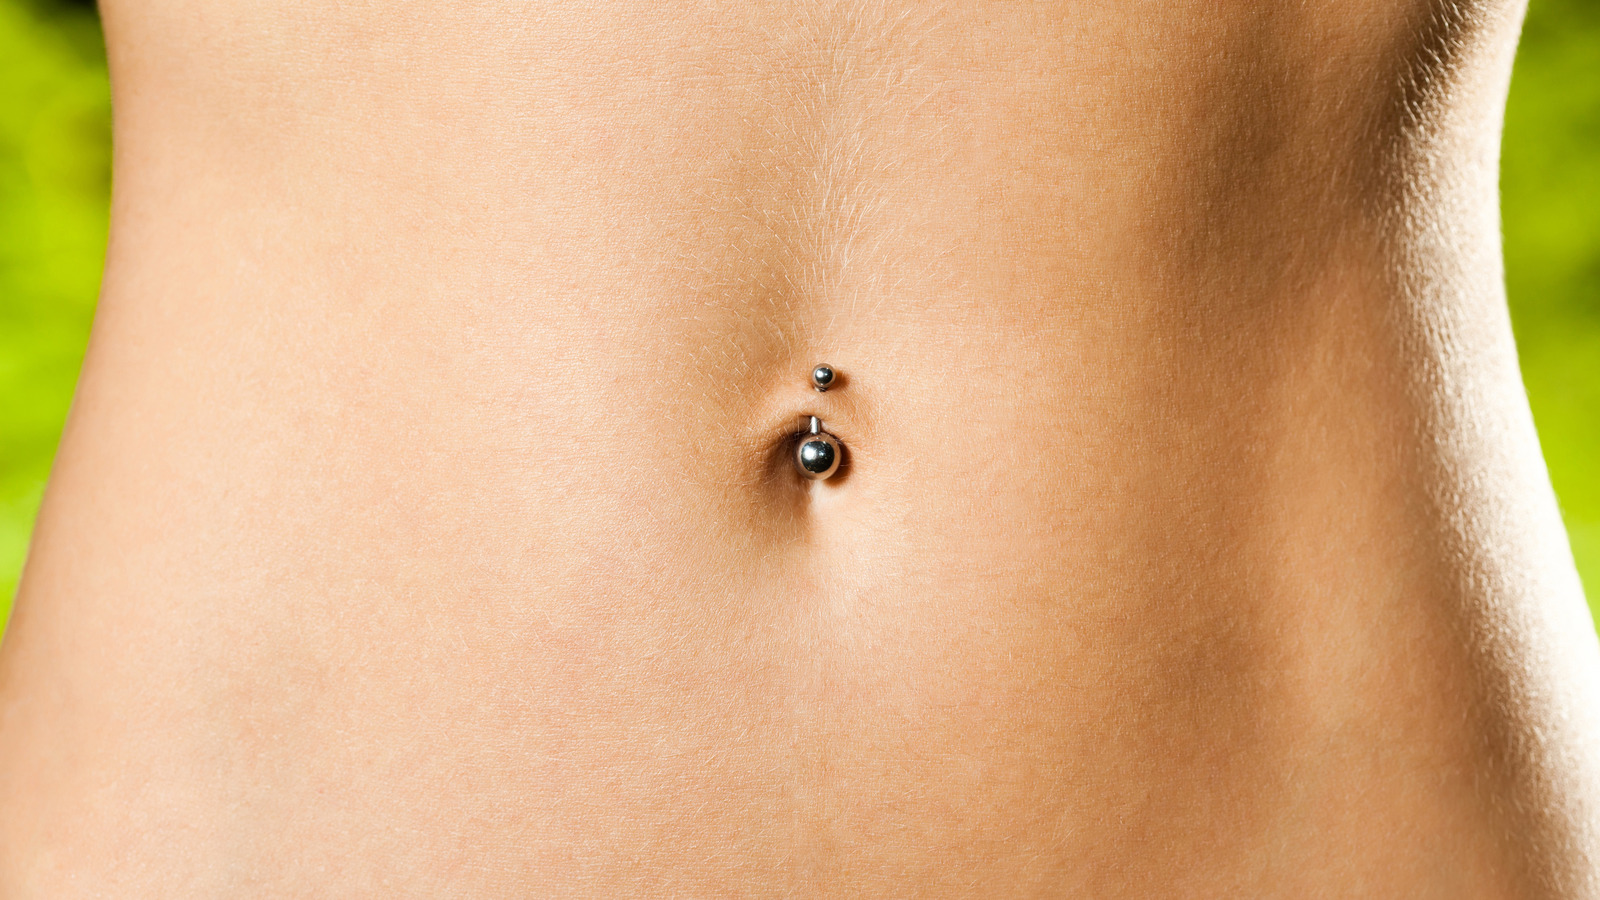 Belly button piercing